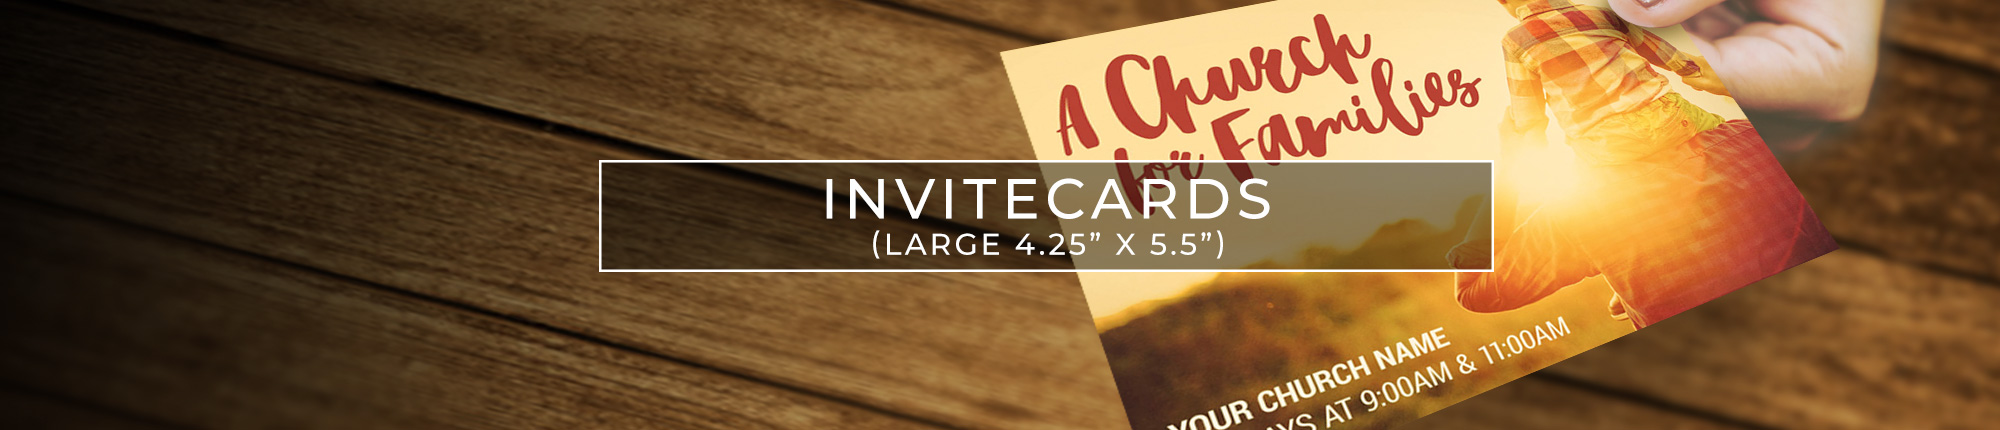 Large Invite Cards